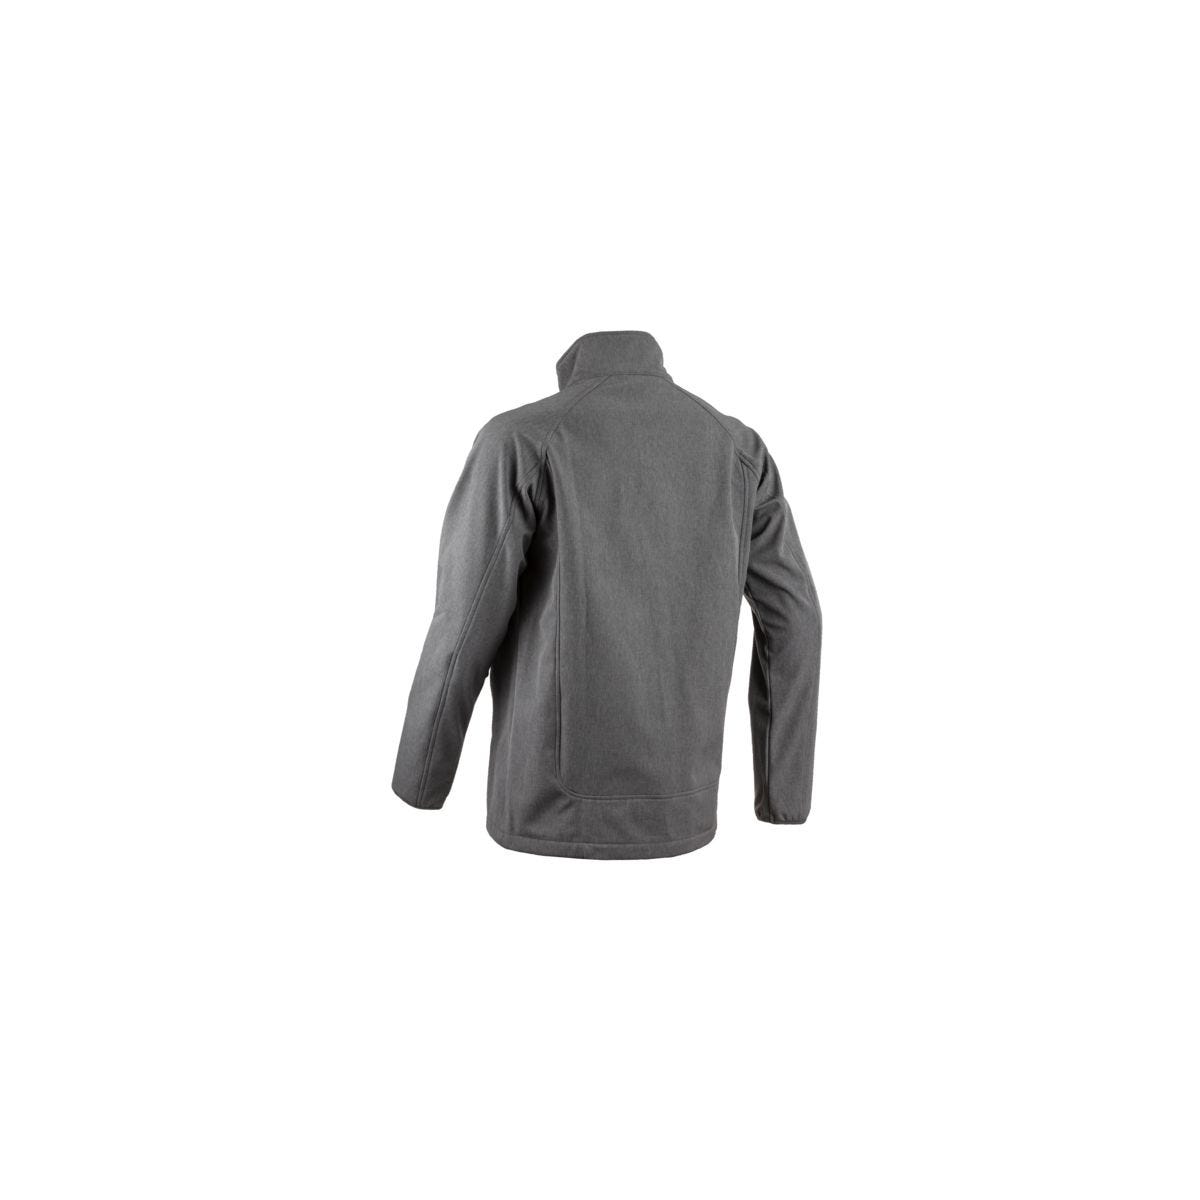 SOBA Veste Softshell gris chiné, homme, 310g/m² - COVERGUARD - Taille 3XL 1